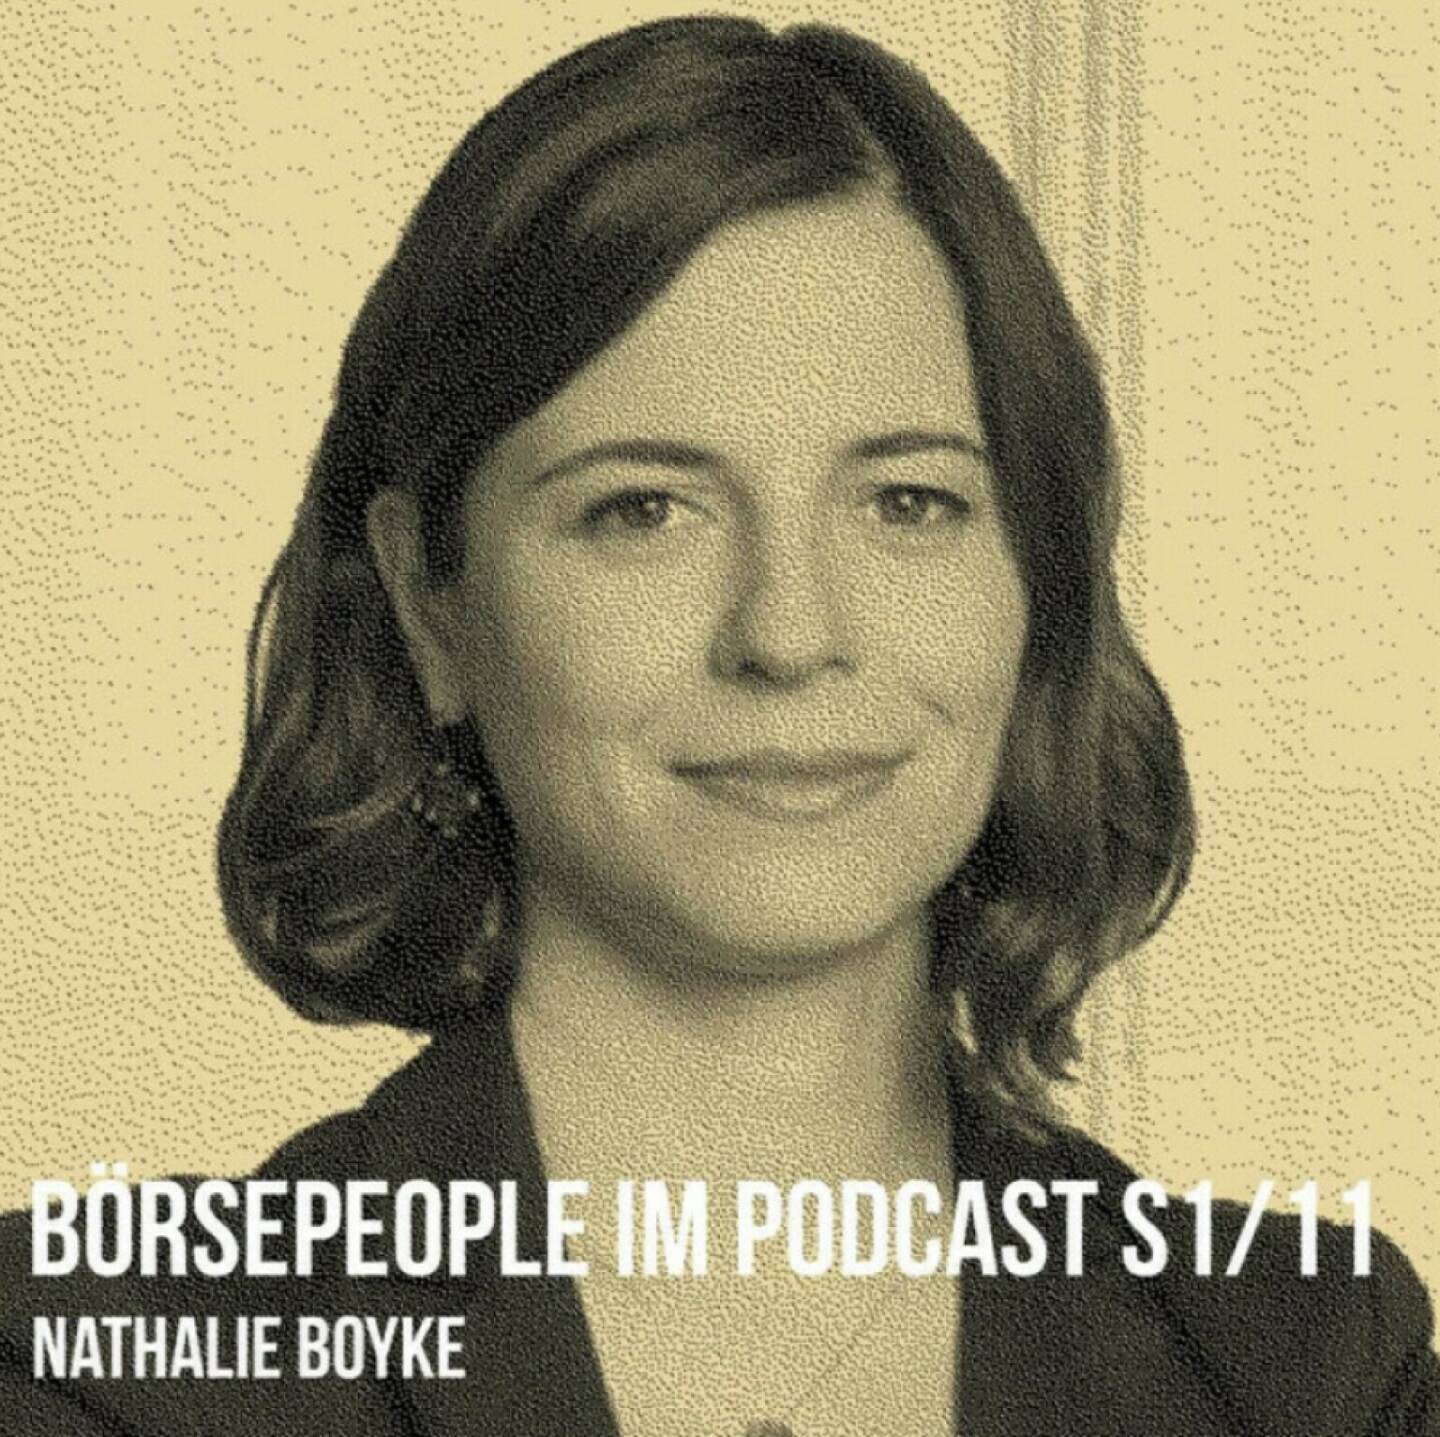 Nathalie Boyke ist der 11. Gast in unserer Börsepeople Season 1 unter http://www.boersenradio.at/people  